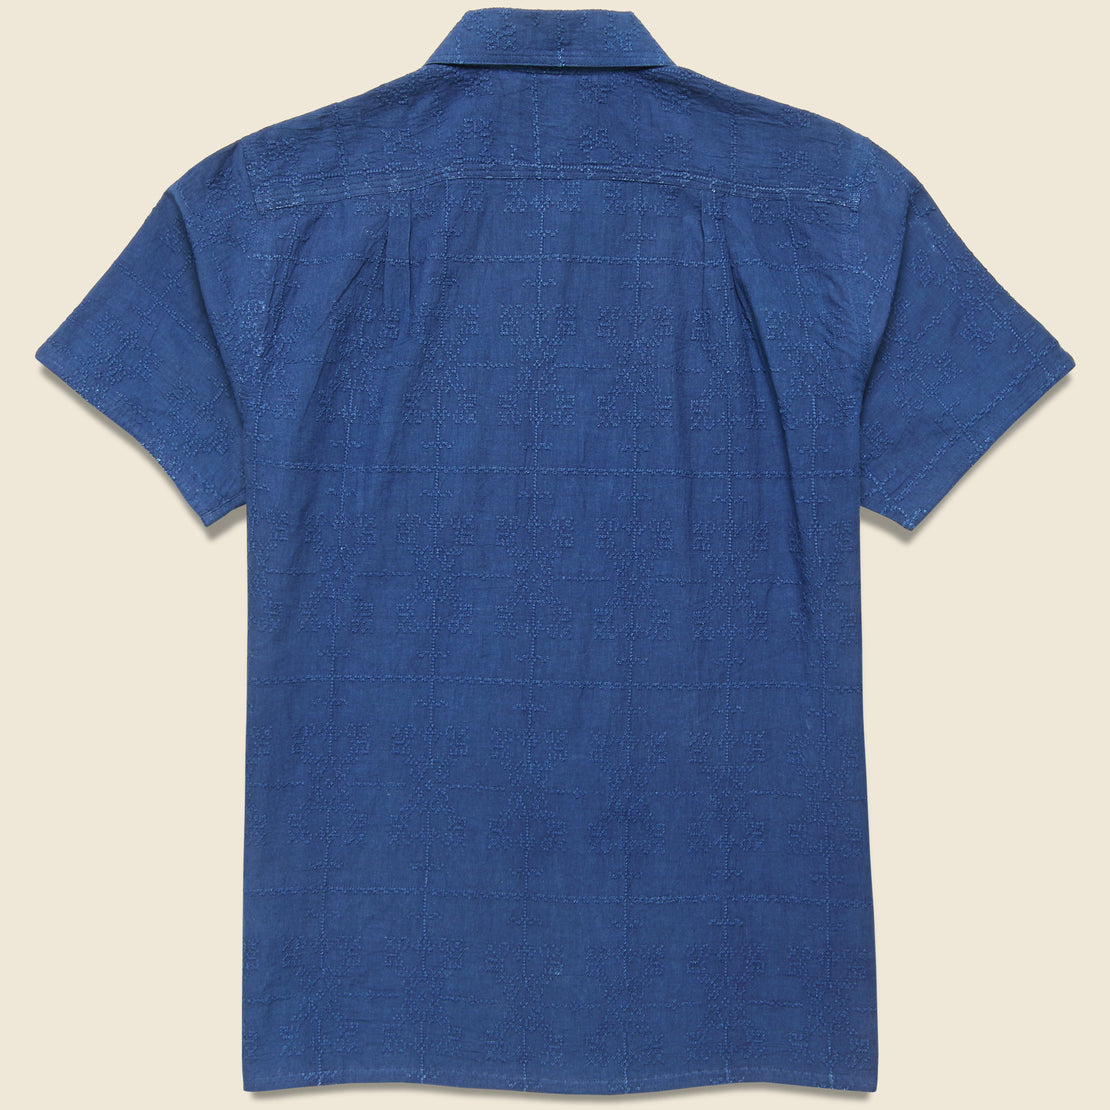 Schiffli Embroidered Shirt - Indigo - Kardo - STAG Provisions - Tops - S/S Woven - Solid